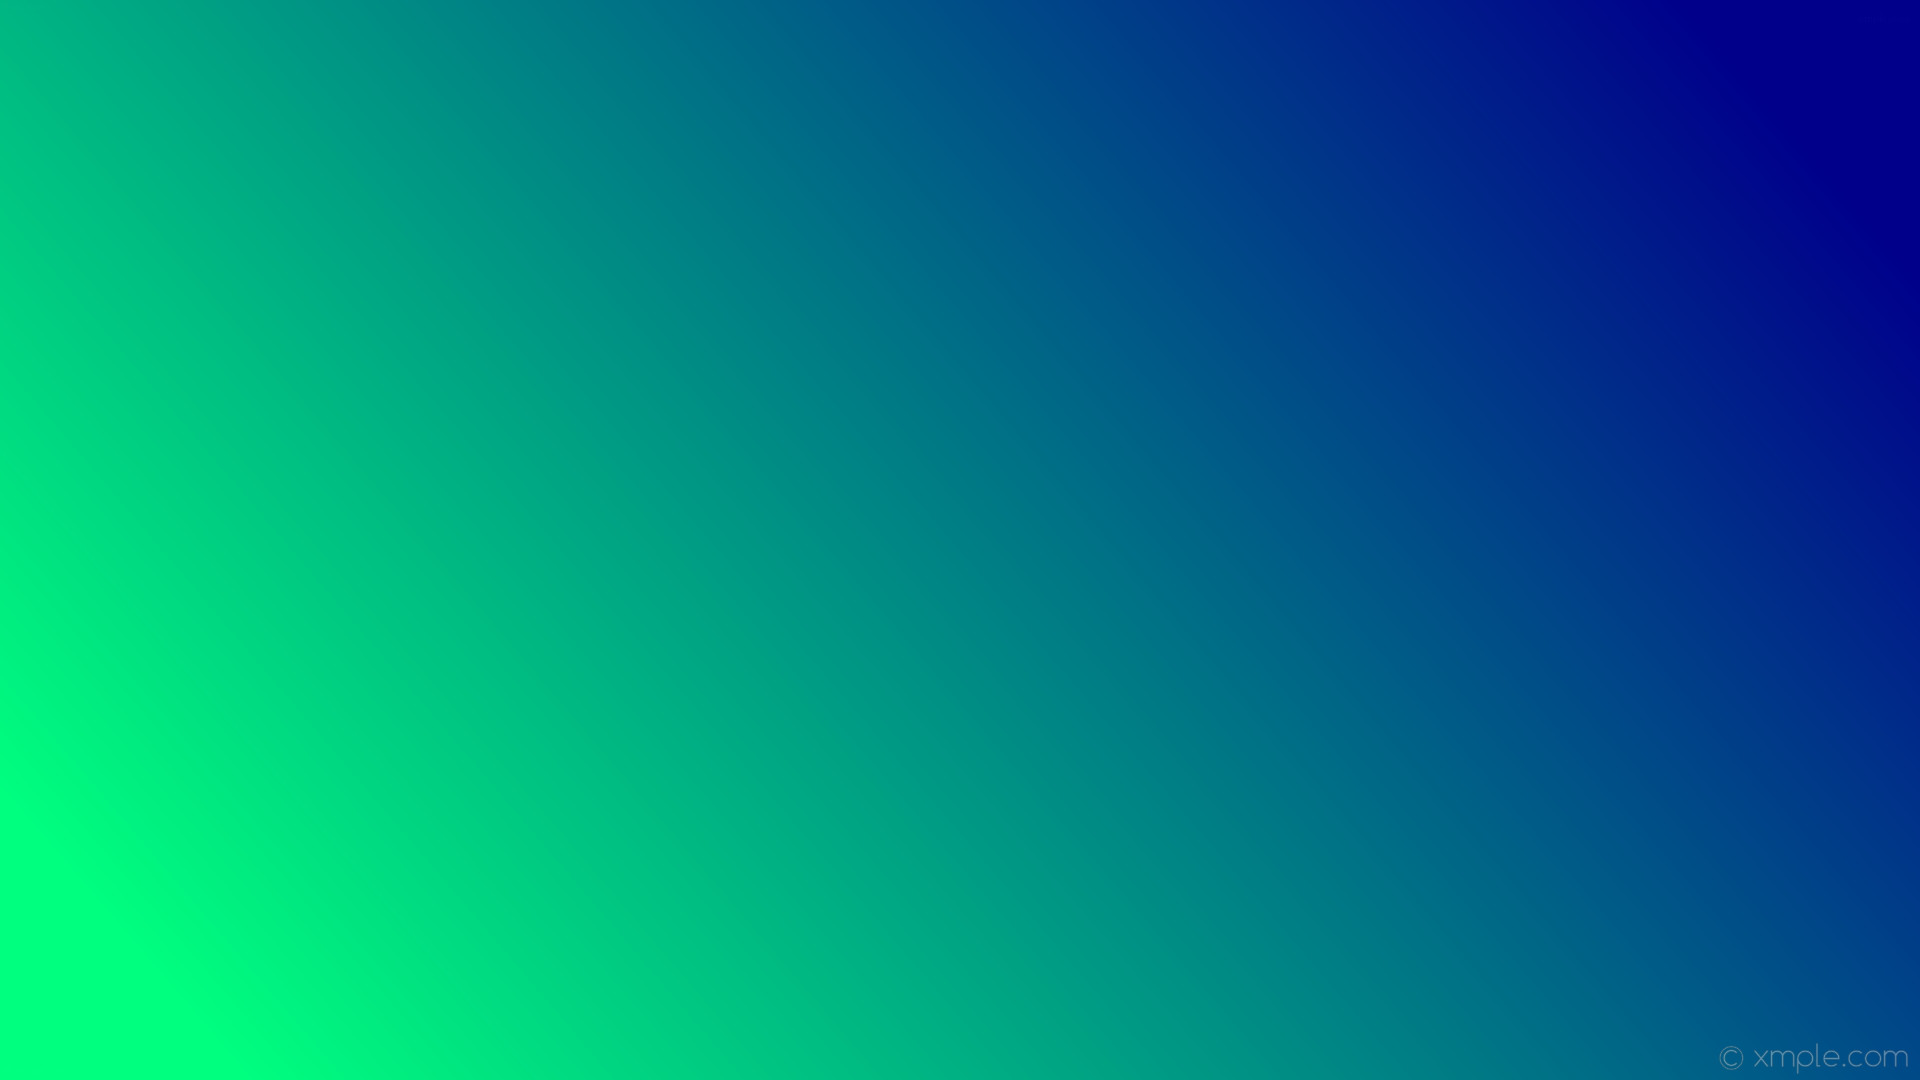 1920x1080 wallpaper linear gradient green blue spring green dark blue #00ff7f #00008b  195Â°